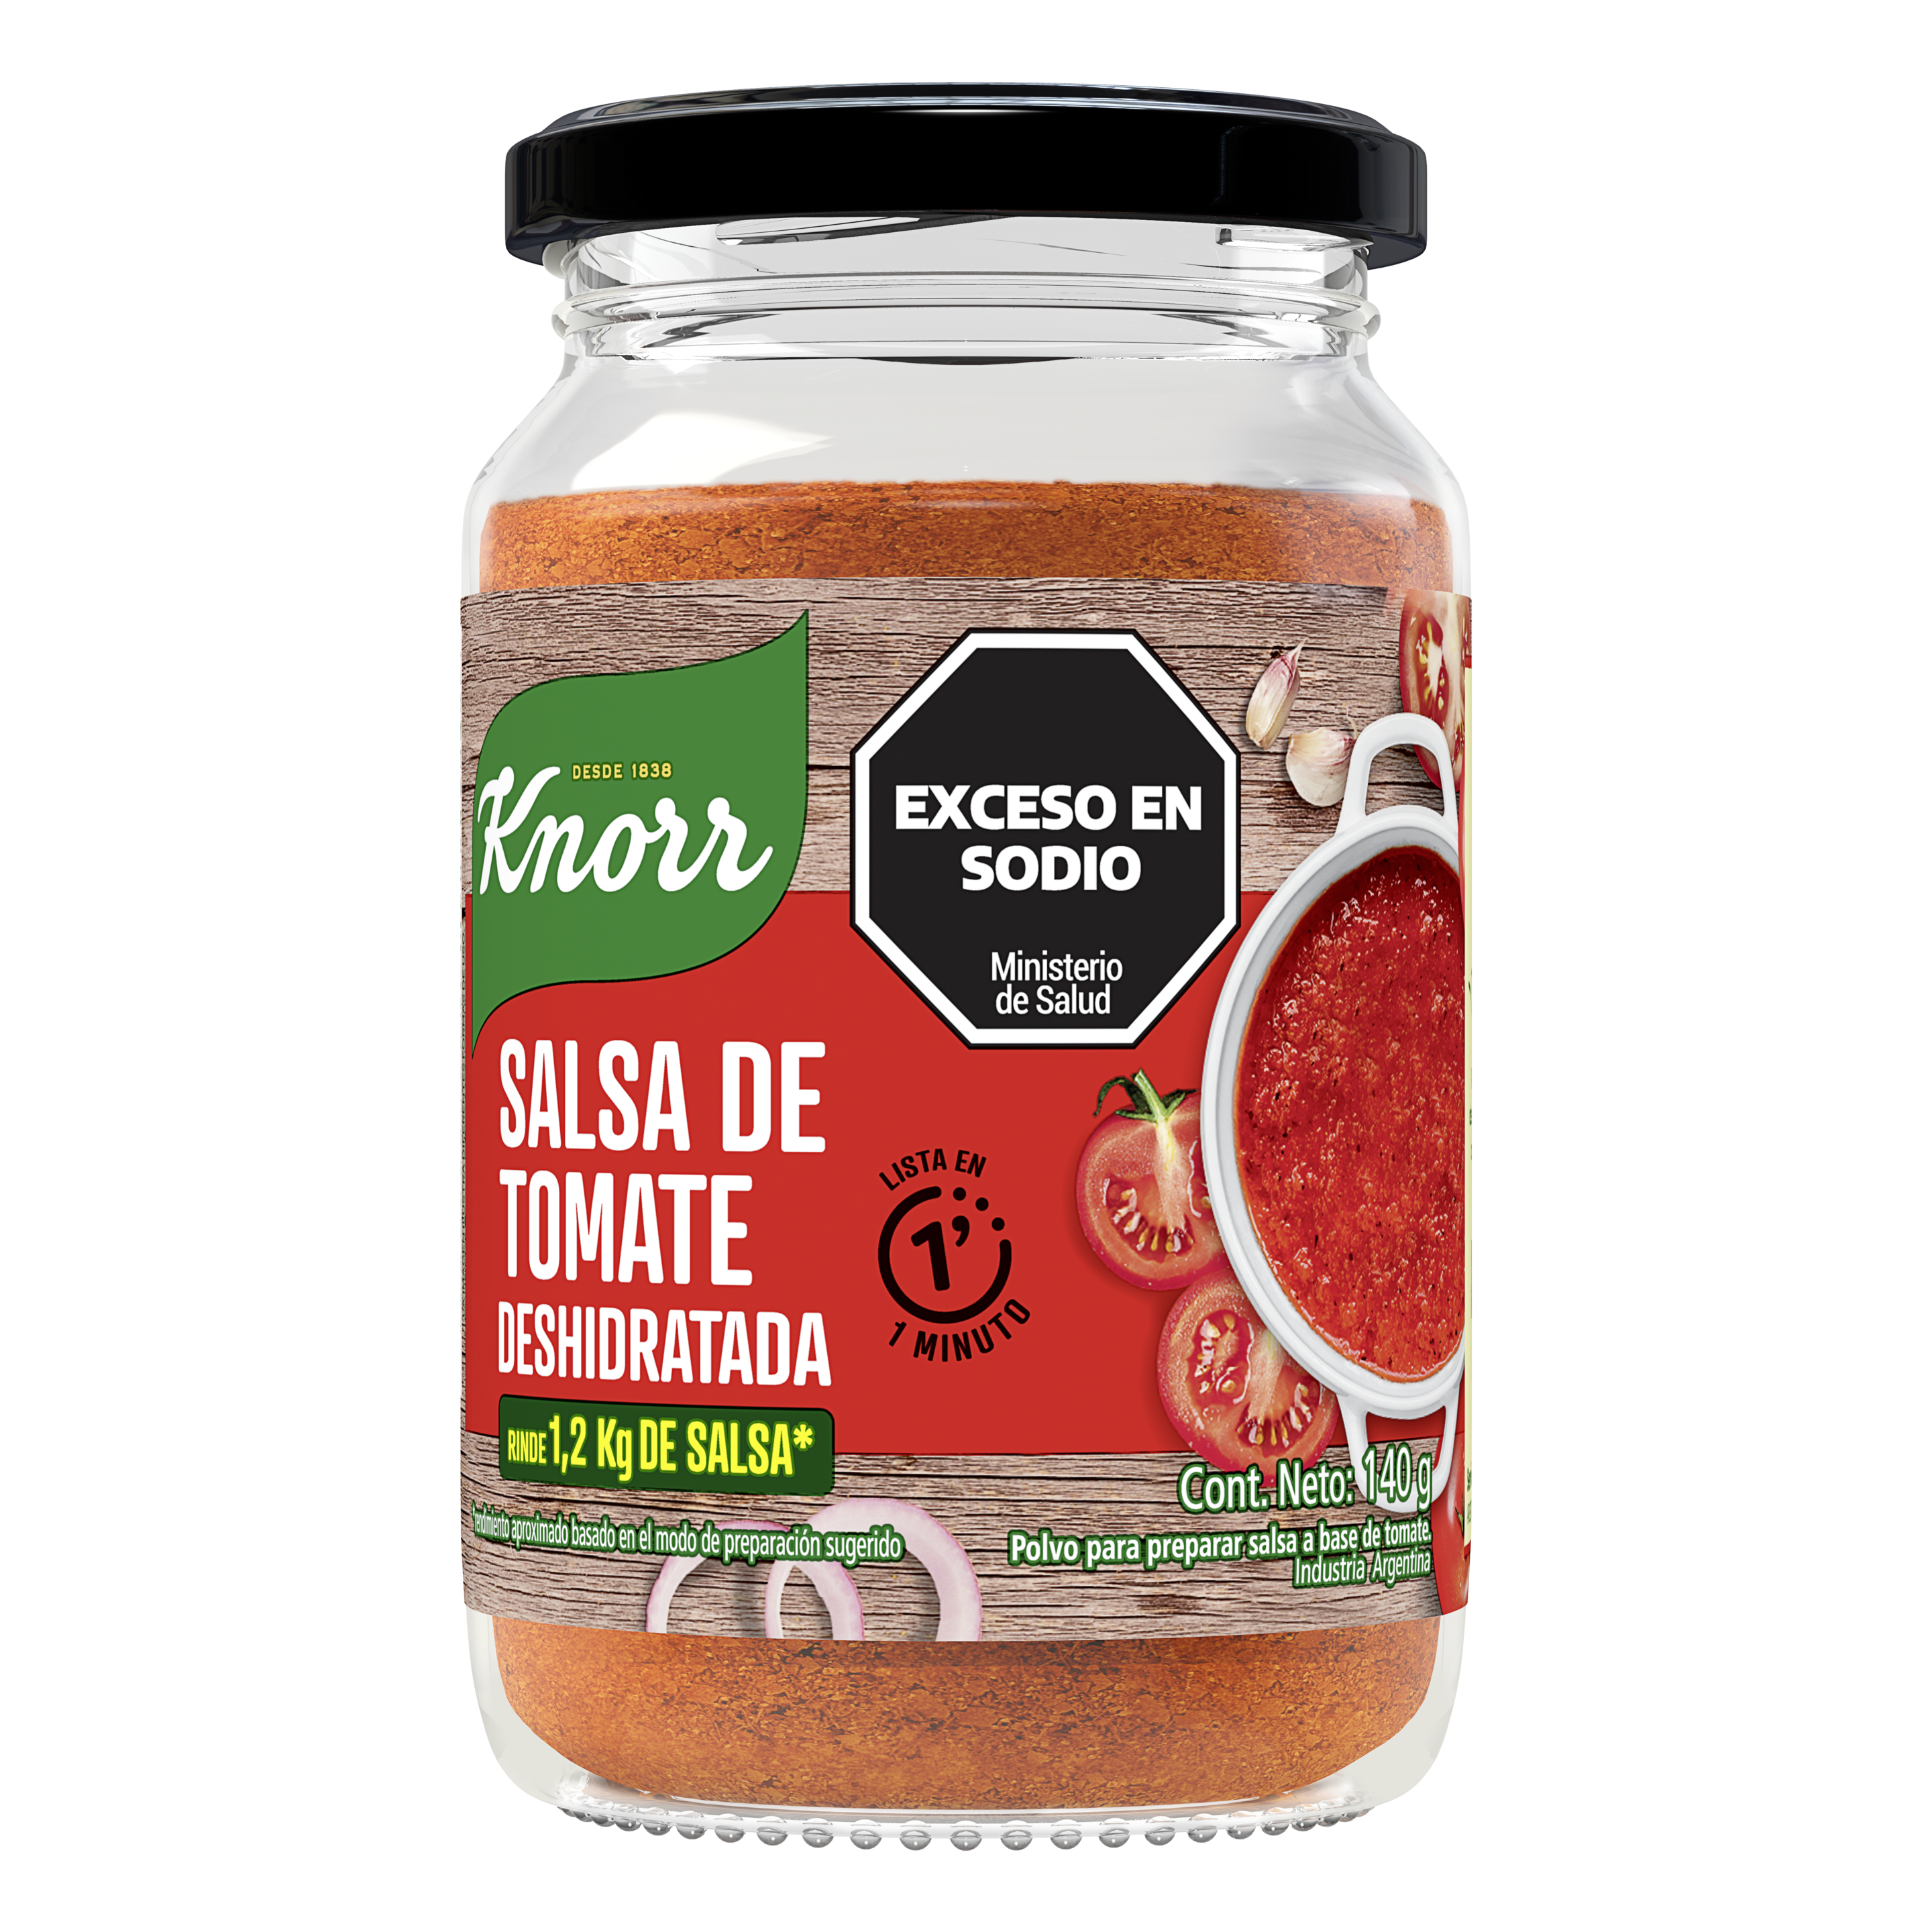 Imagen de envase Salsa de Tomate Deshidratada Knorr